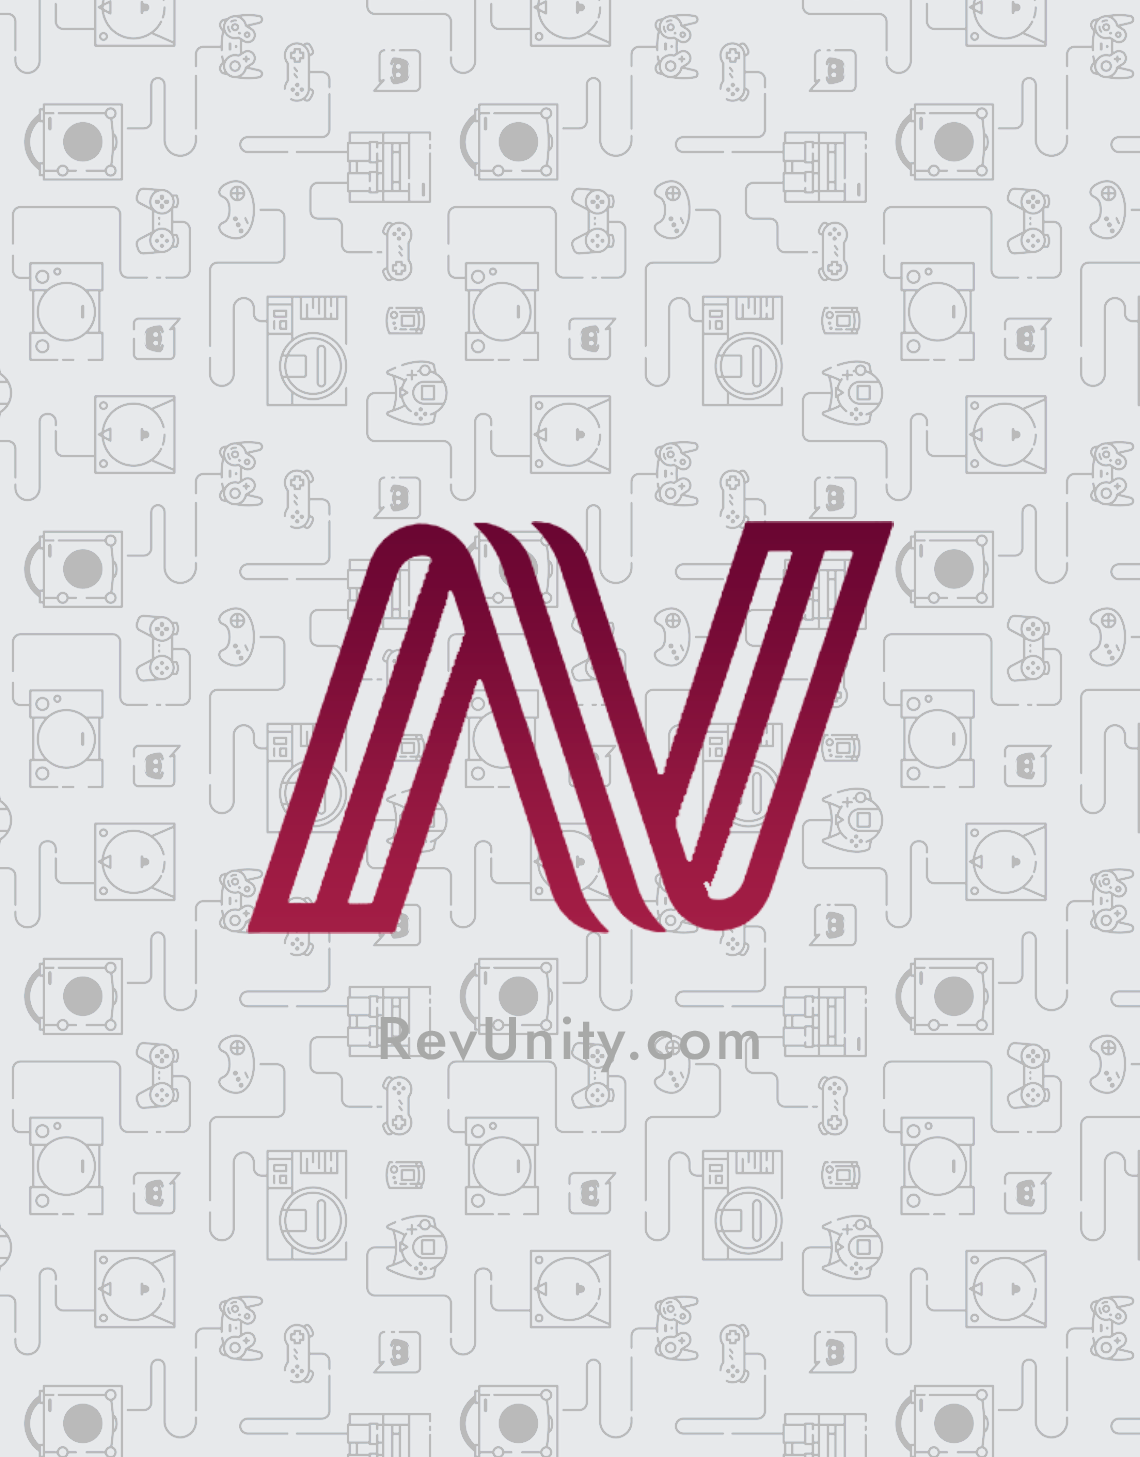 redEngine Spoofer - RevUnity Documentation